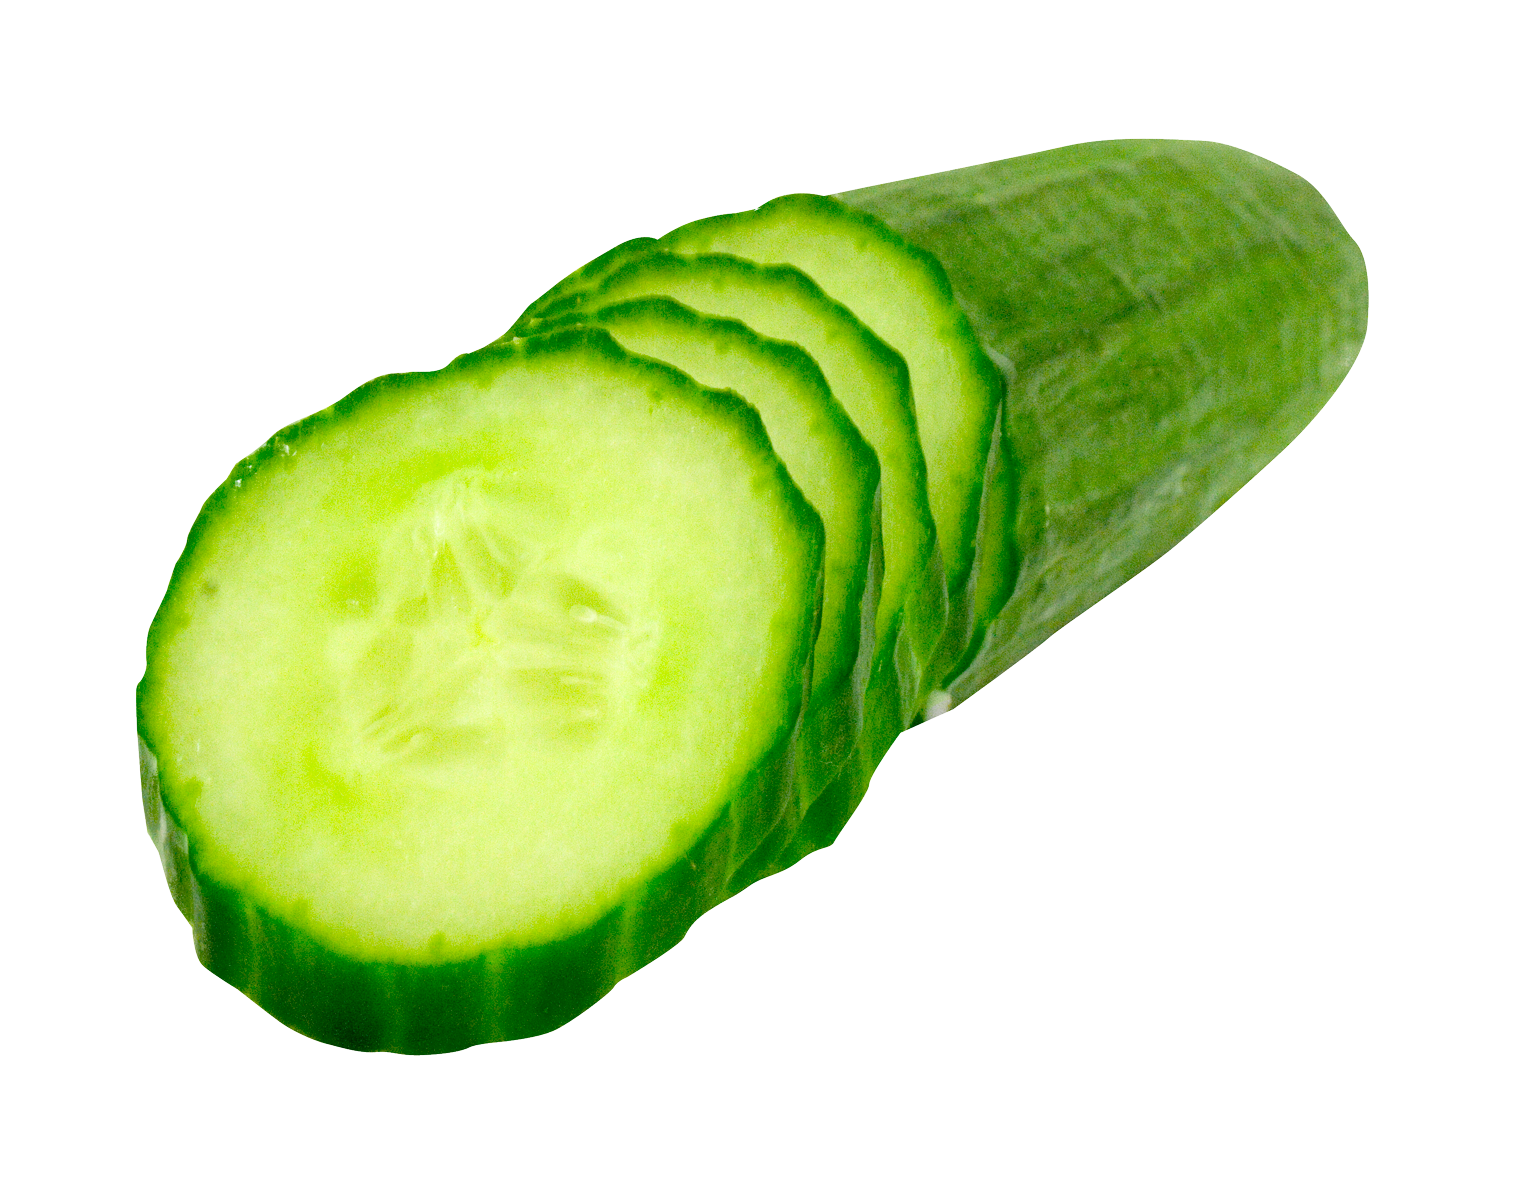 Cucumber clipart veg. Slice png image purepng